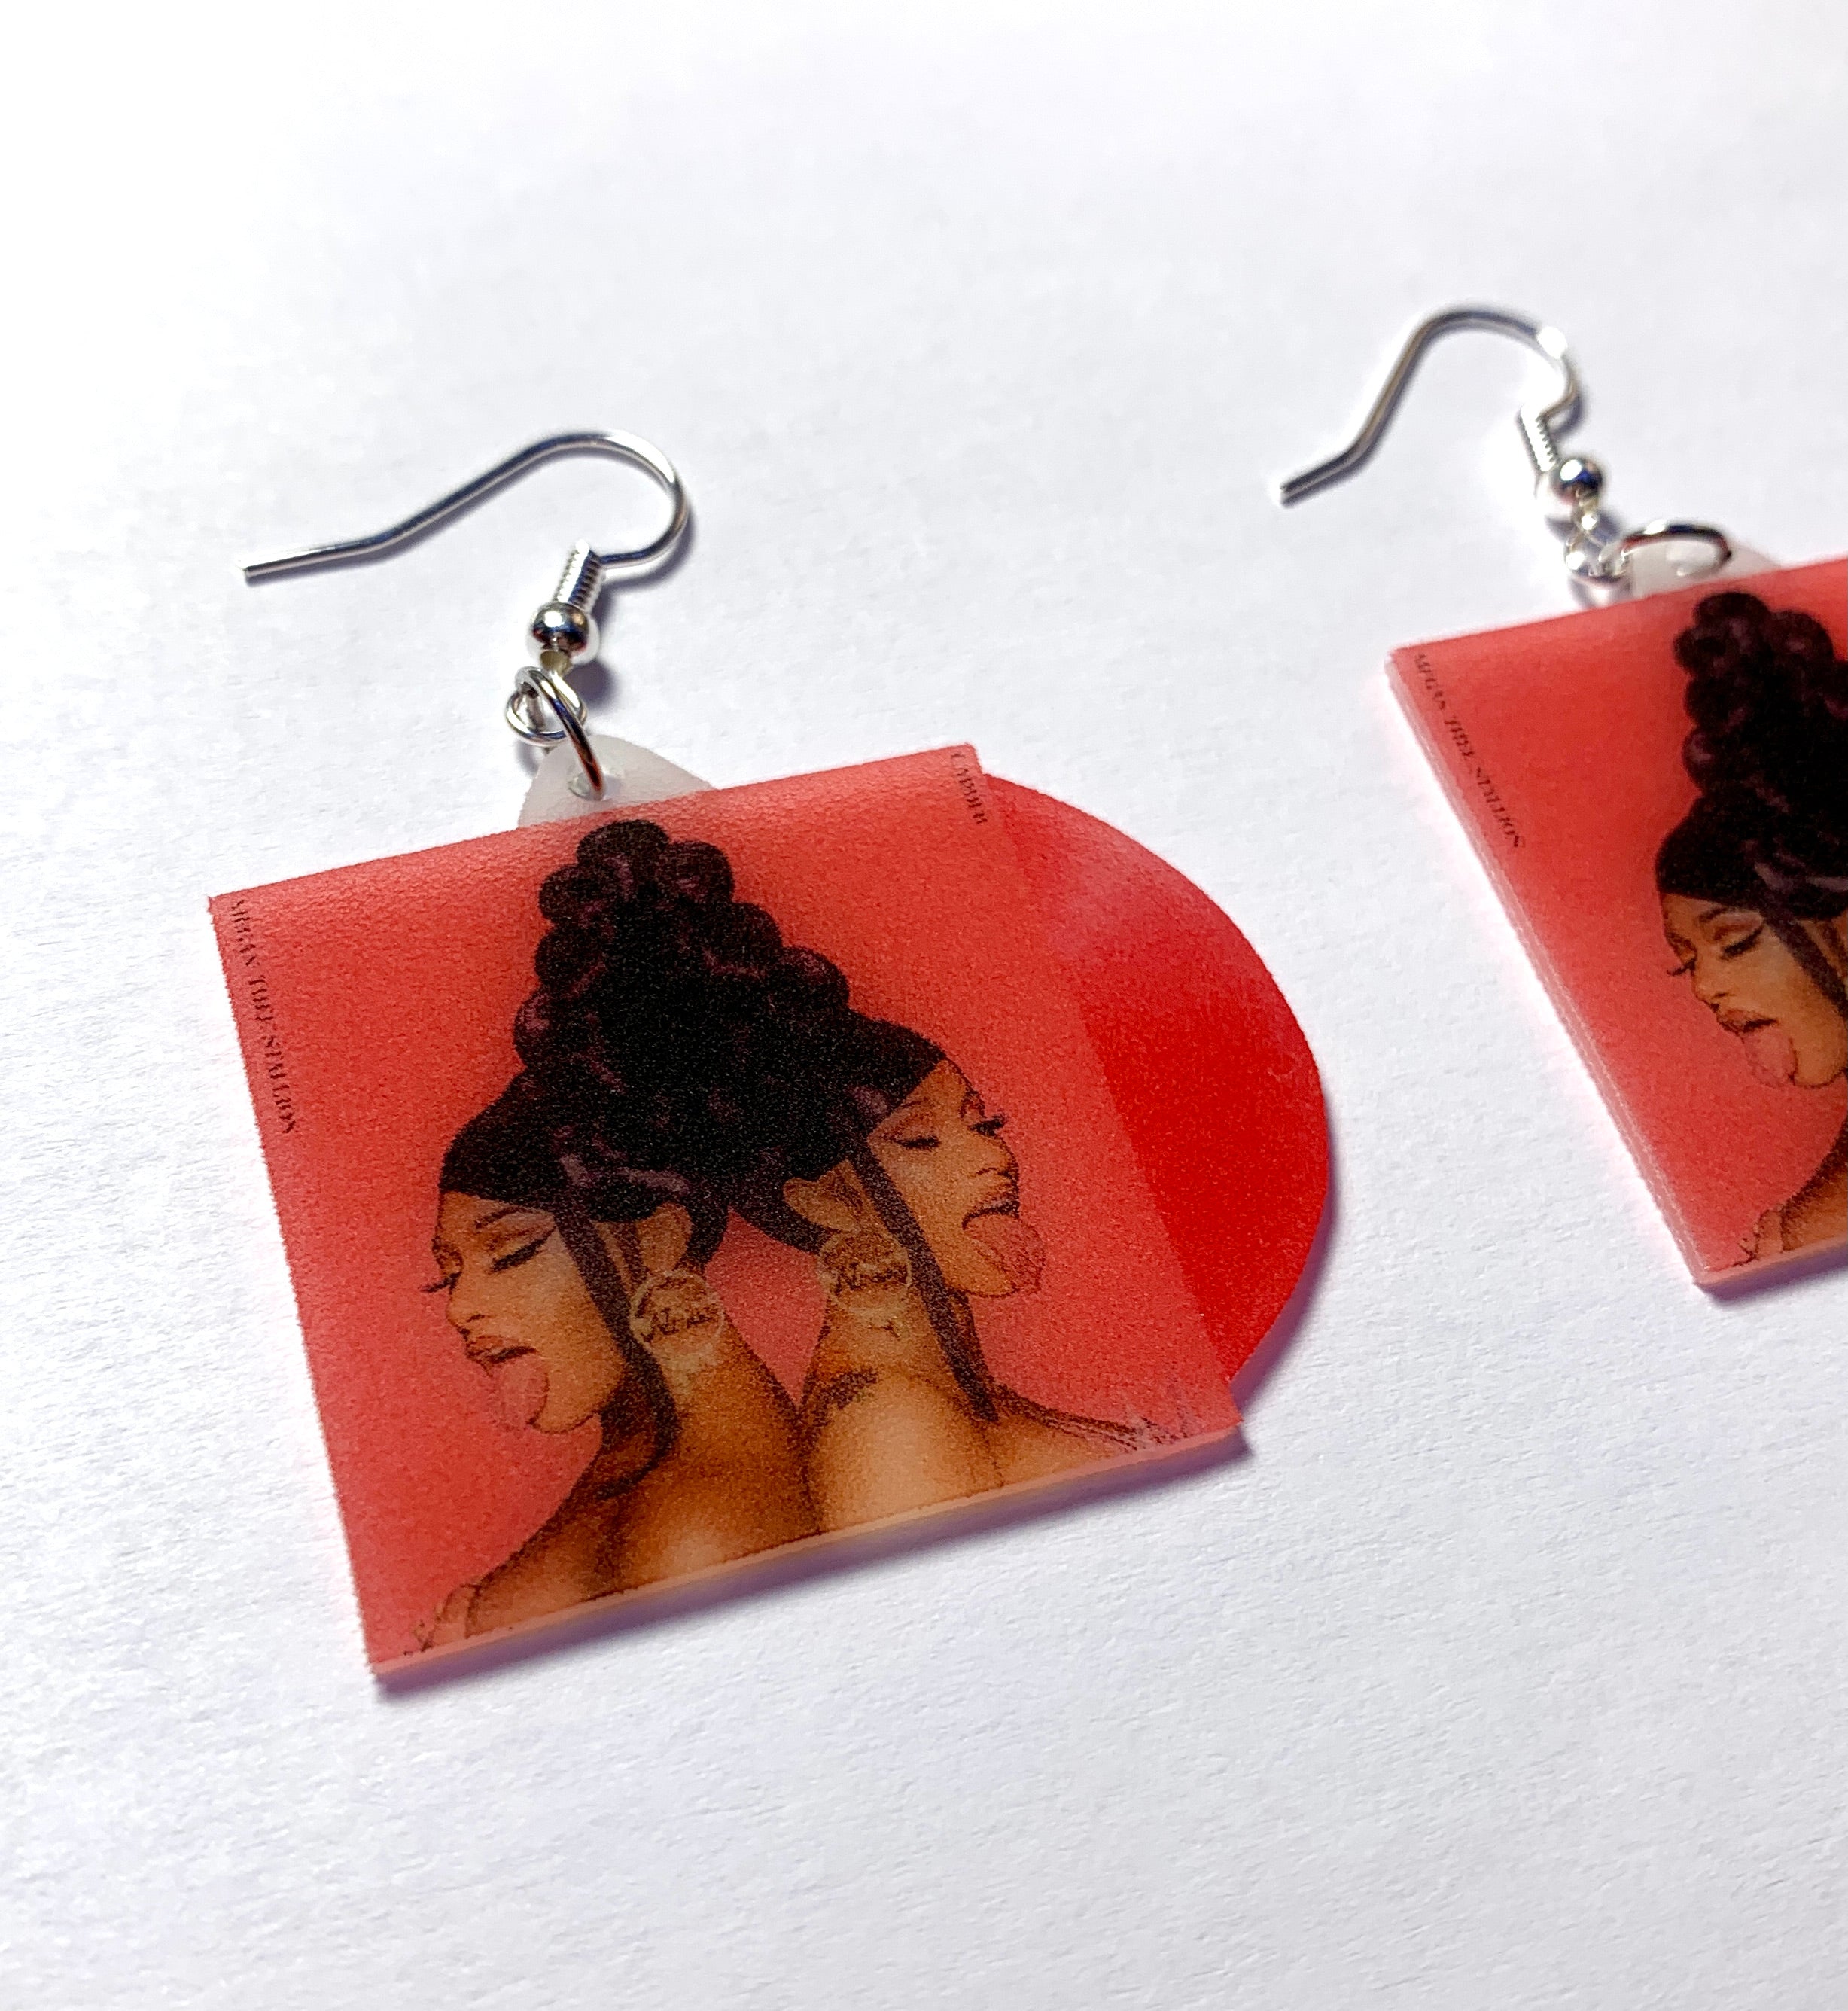 Cardi B and Megan Thee Stallion WAP Vinyl Single Handmade Earrings!